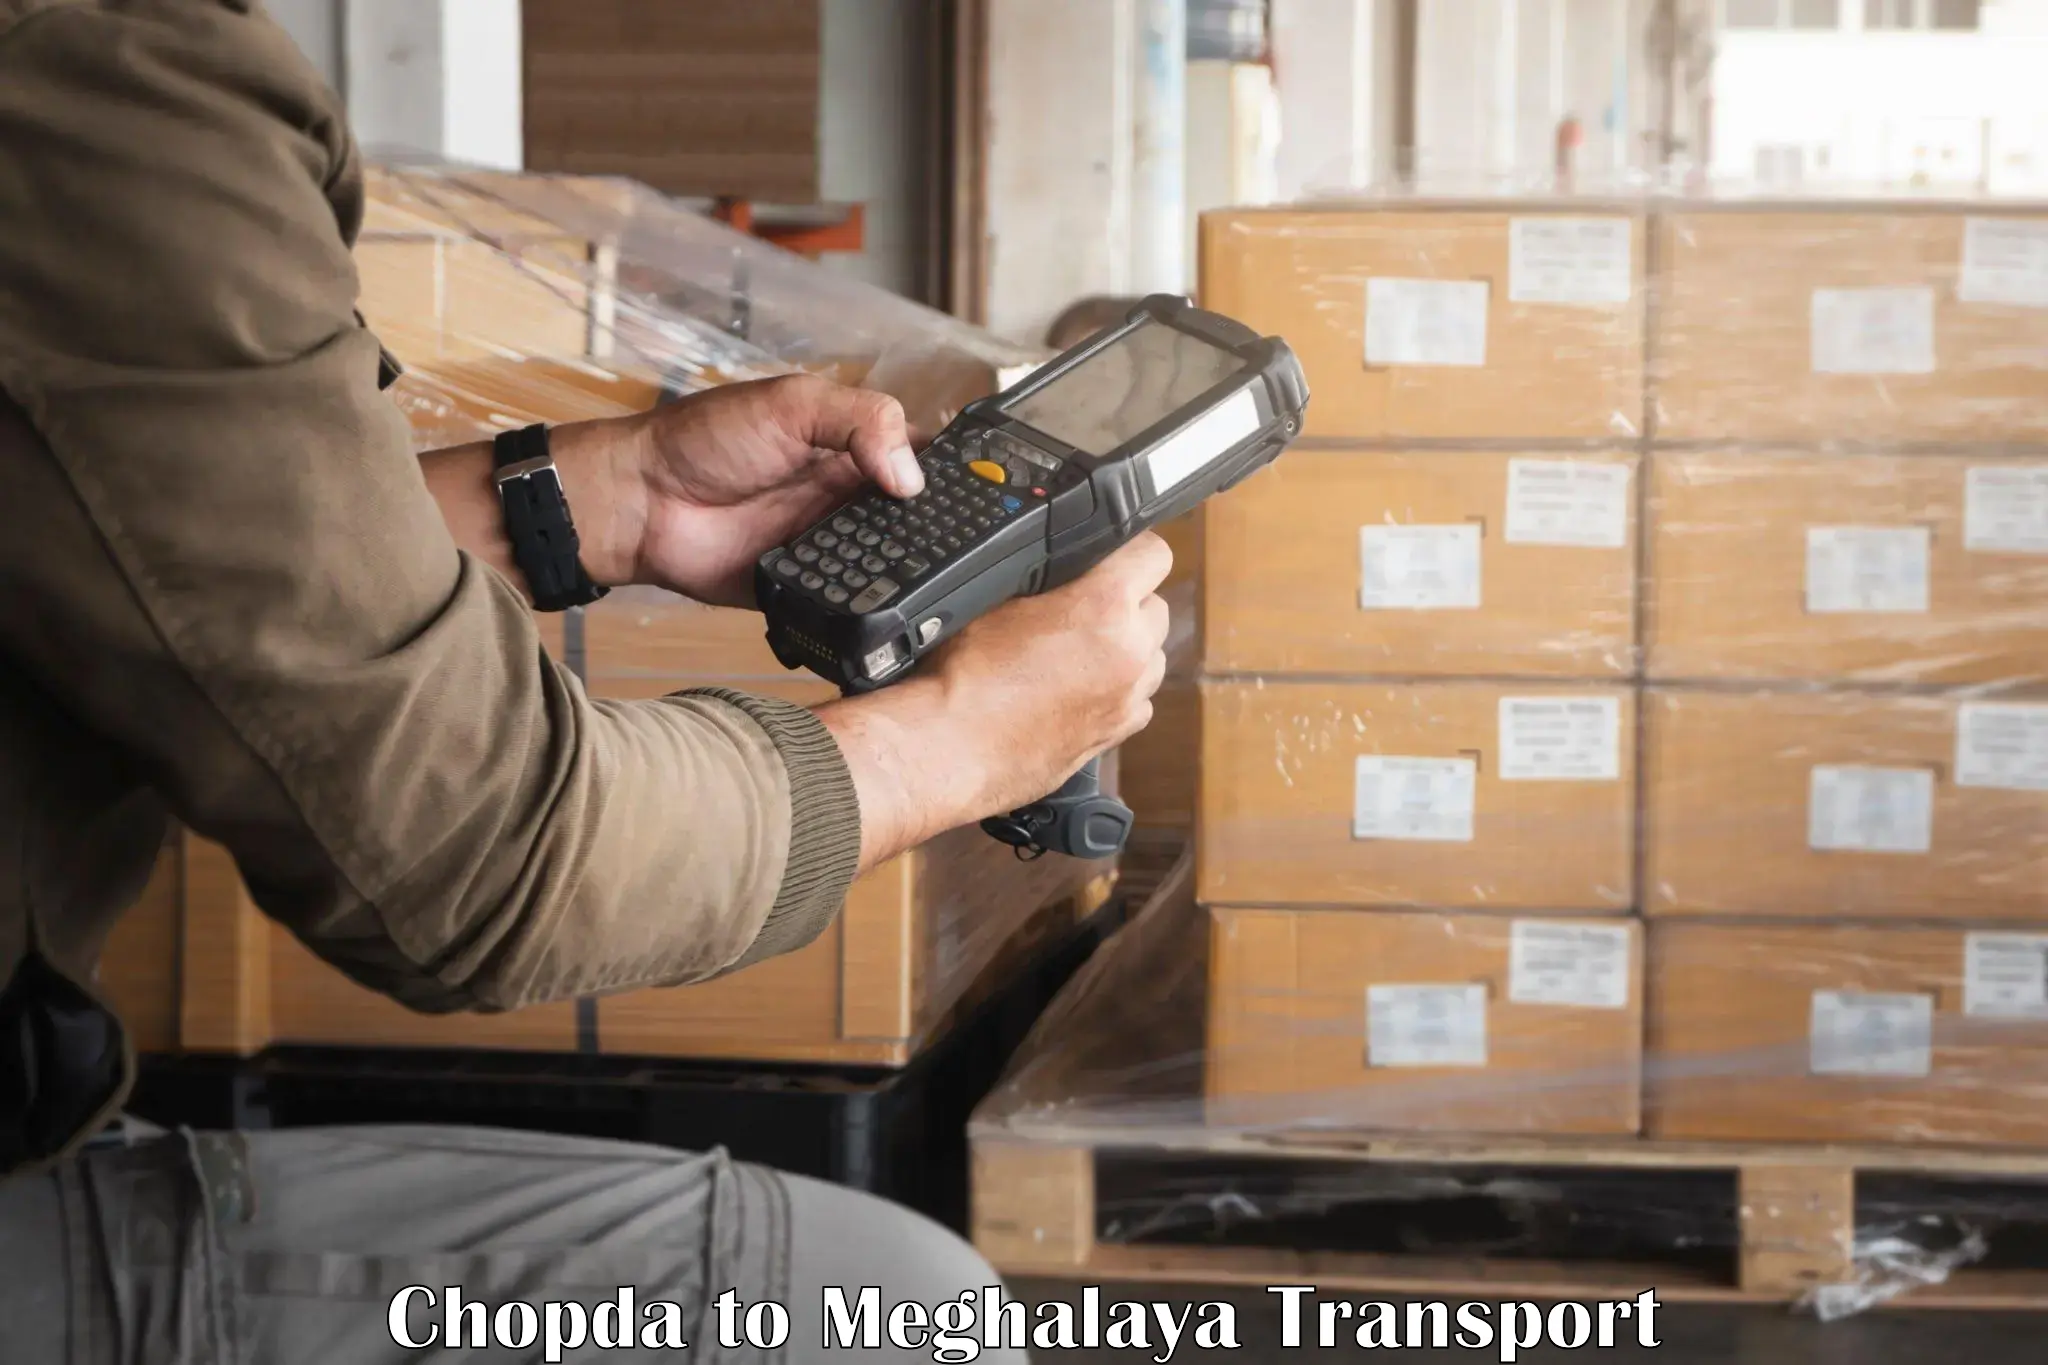 Goods delivery service Chopda to Meghalaya